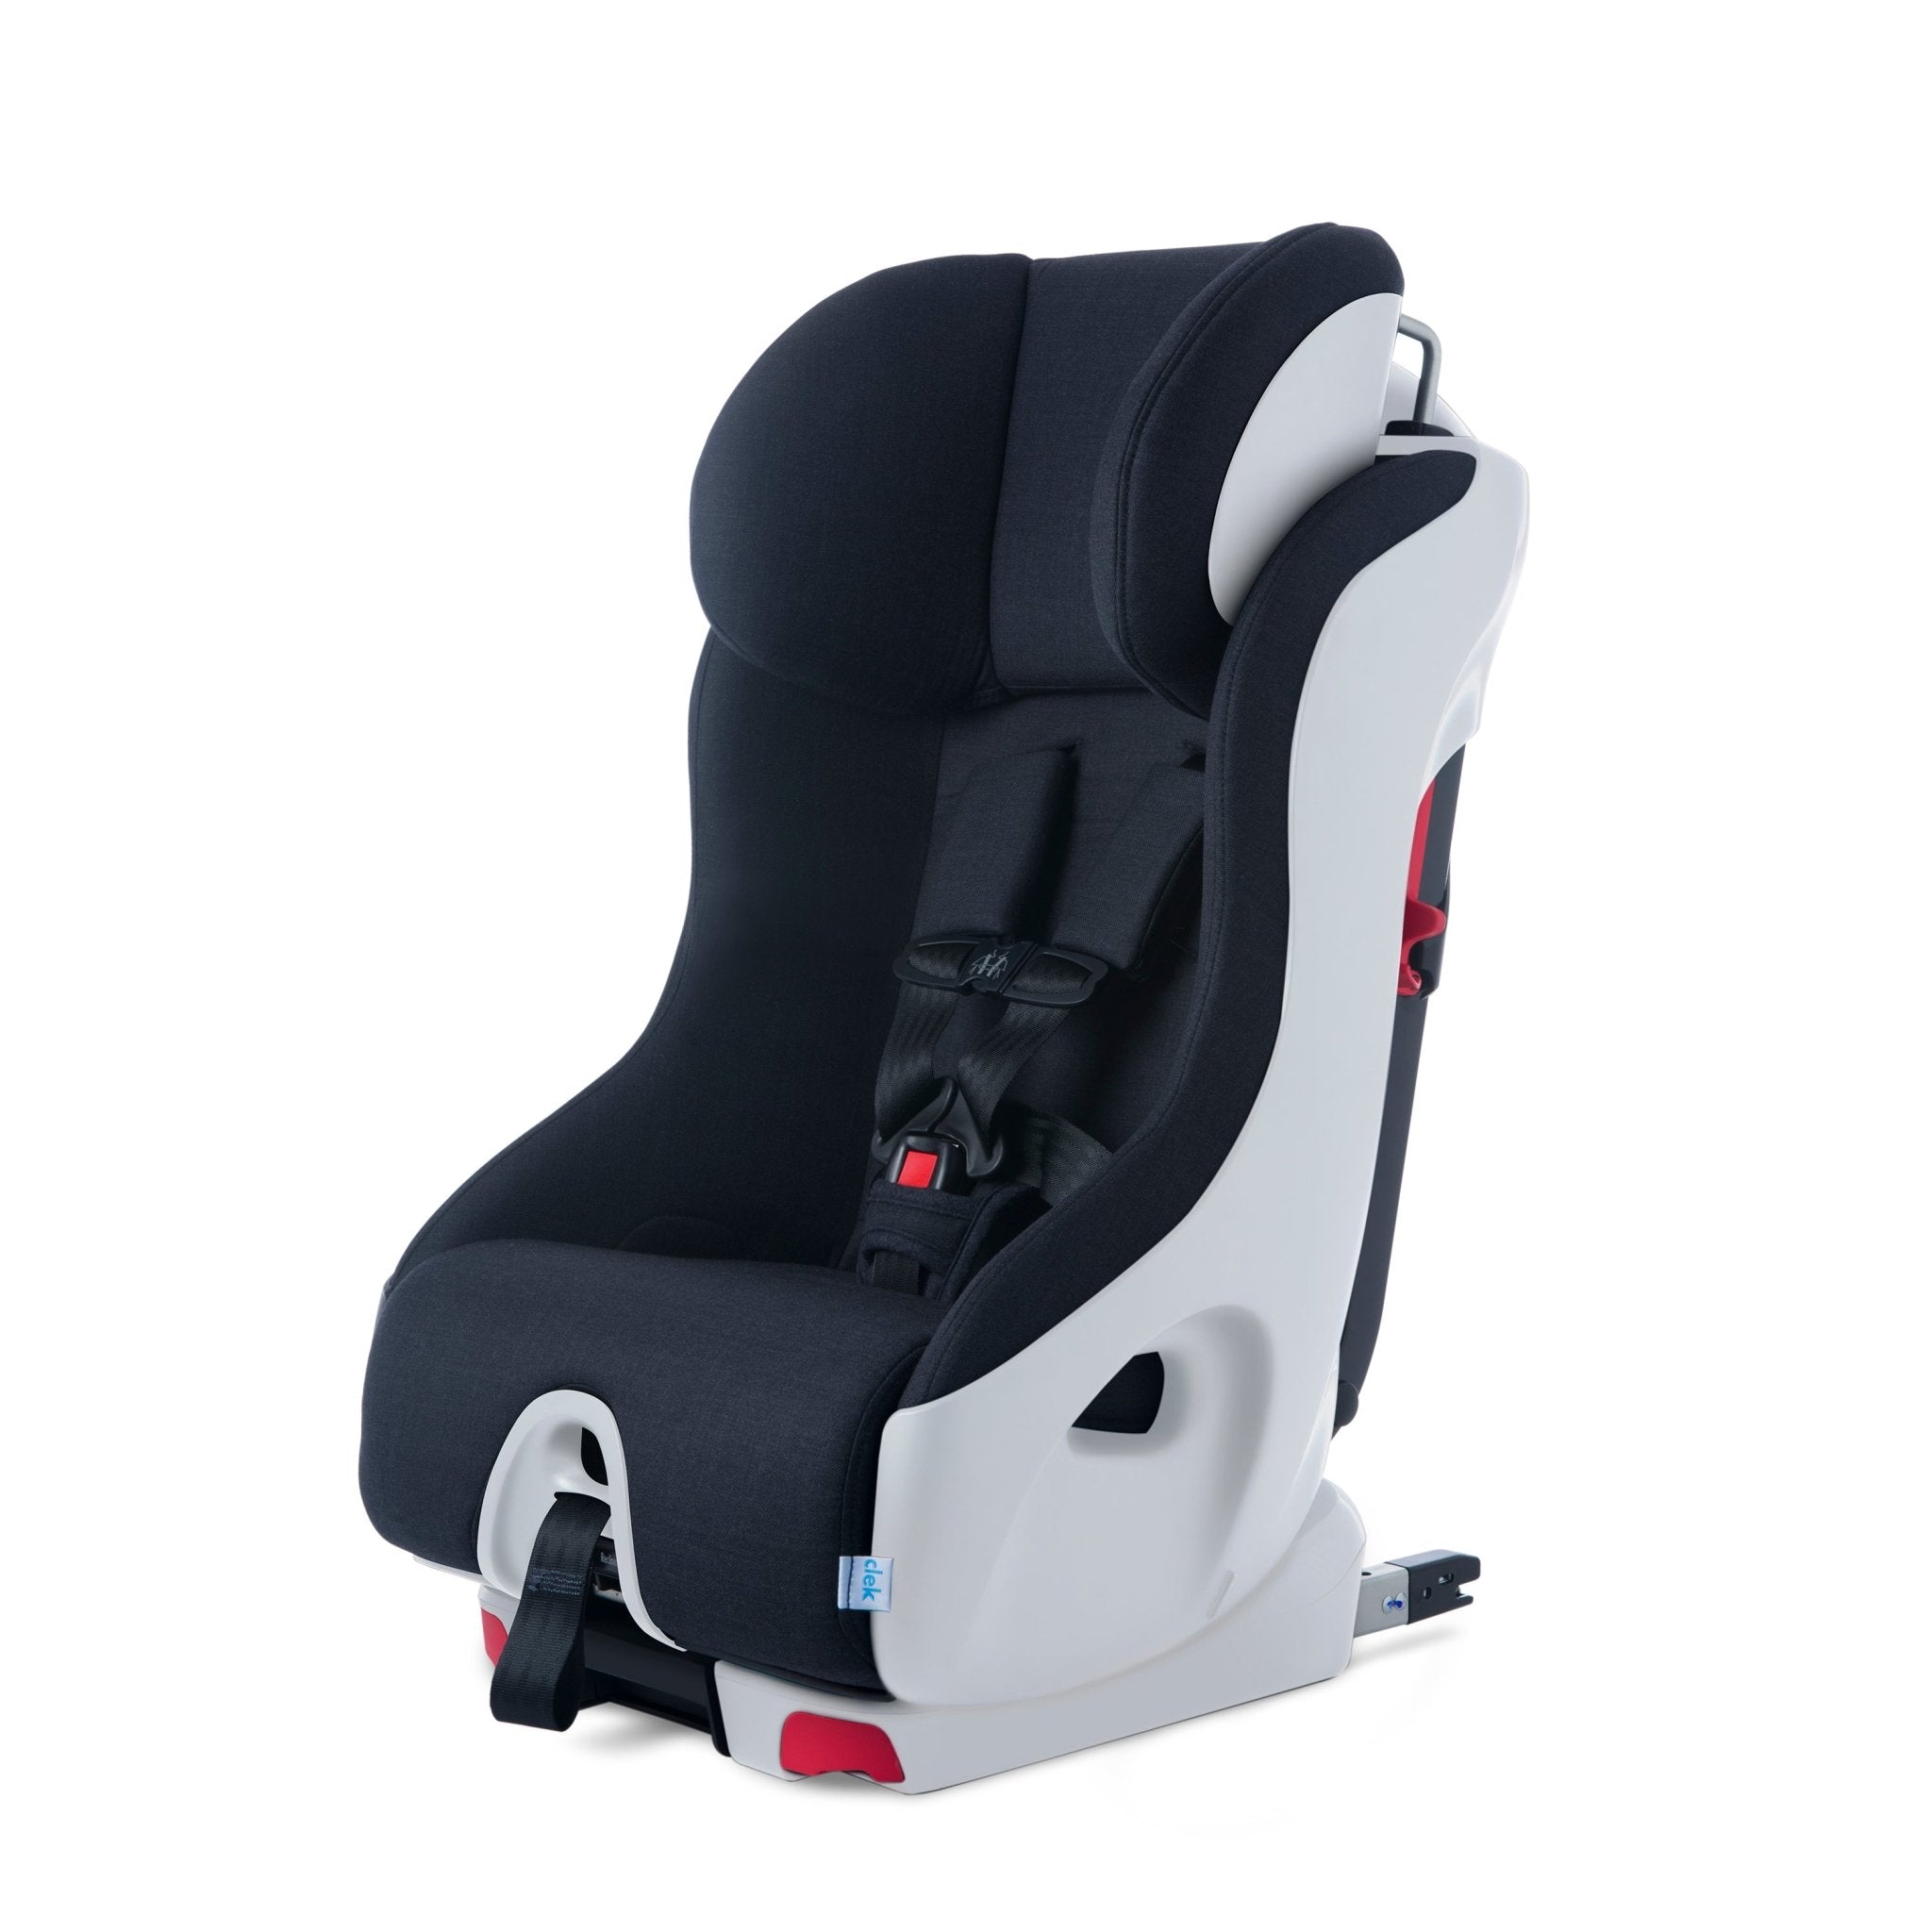 Foonf Convertible Car Seat - ANB Baby -826783013941$500 -$1000